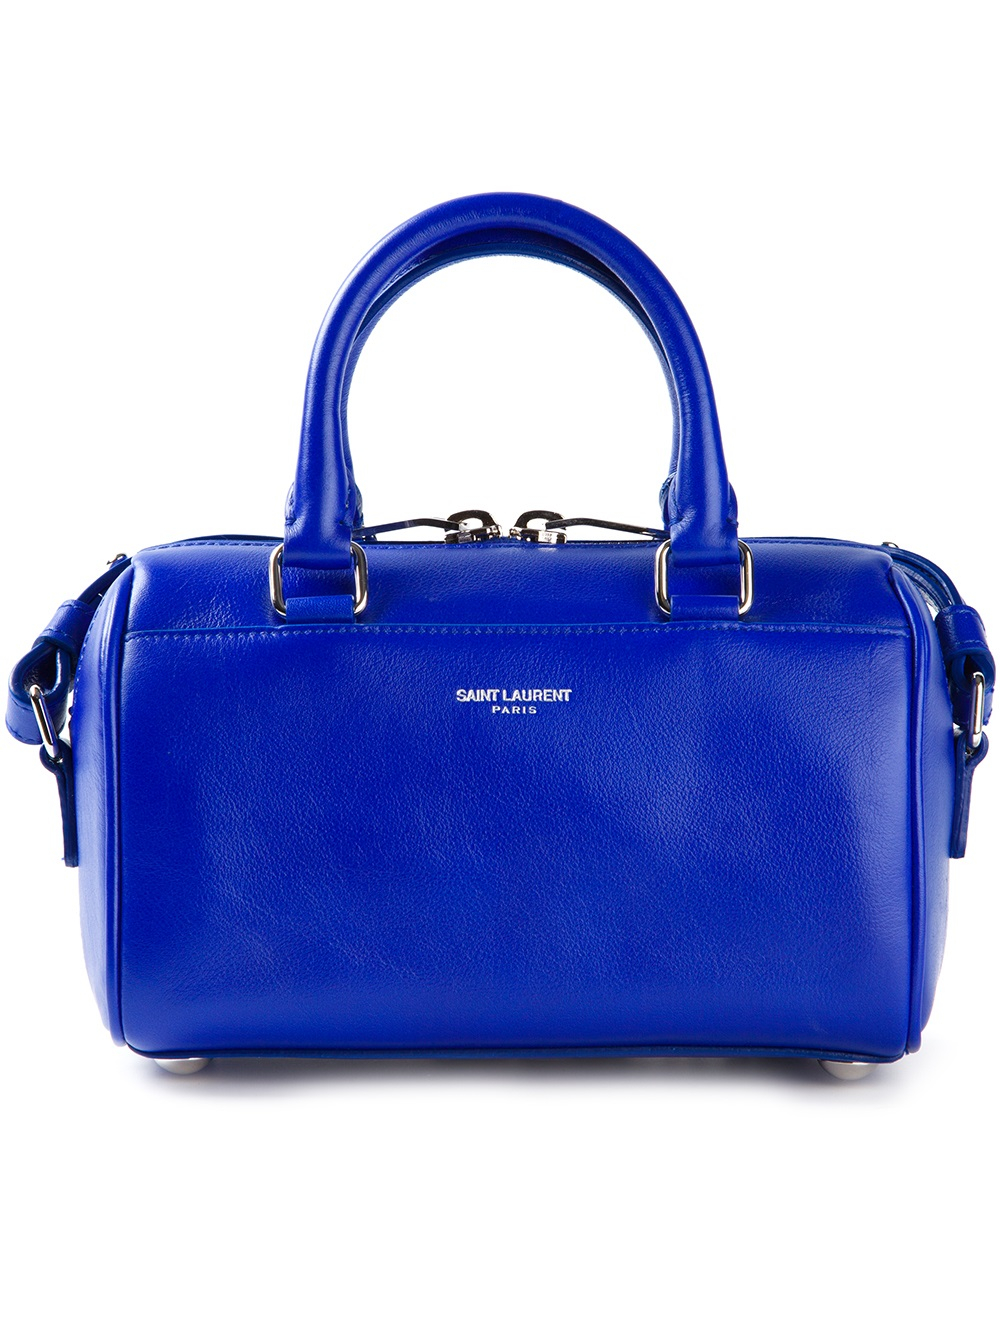 Saint Laurent Baby Duffle Shoulder Bag in Blue | Lyst